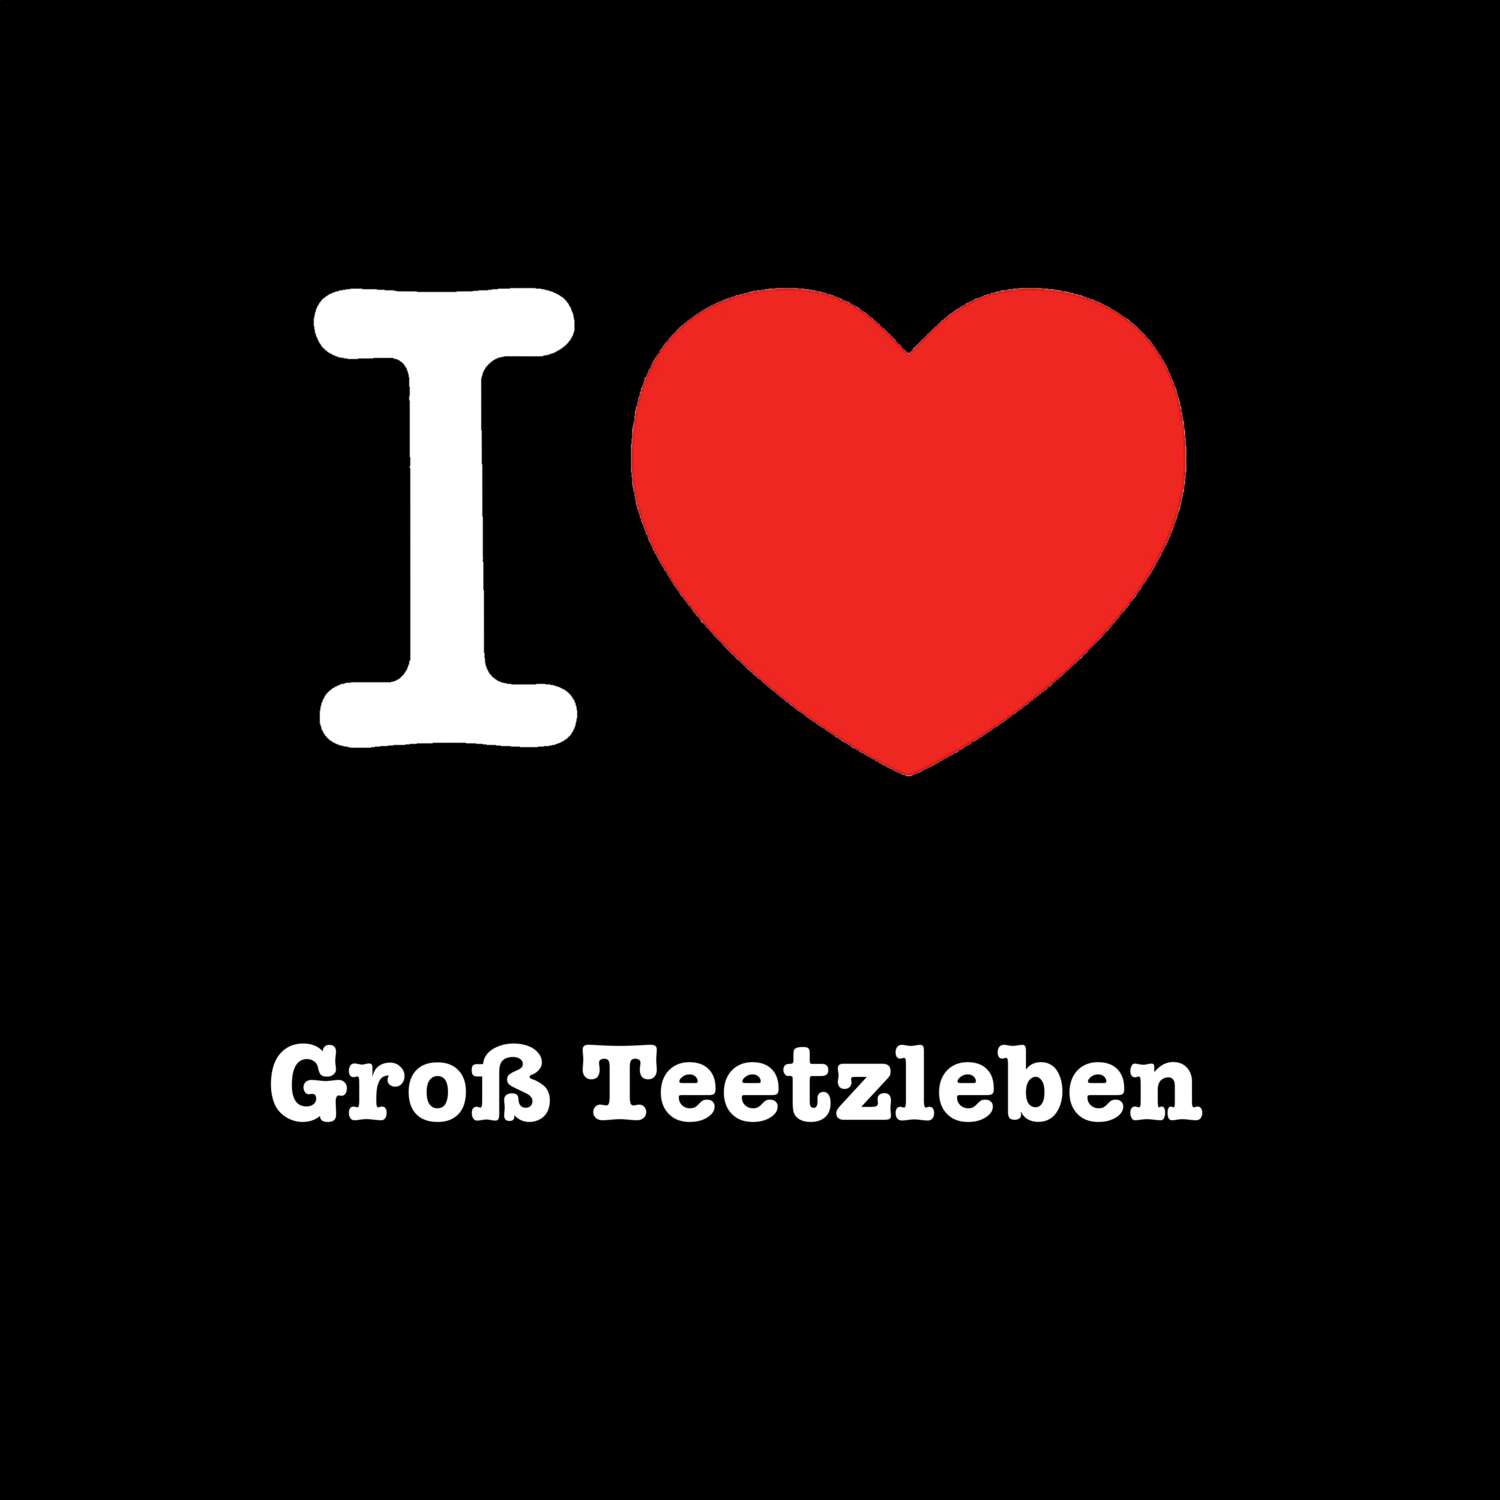 Groß Teetzleben T-Shirt »I love«